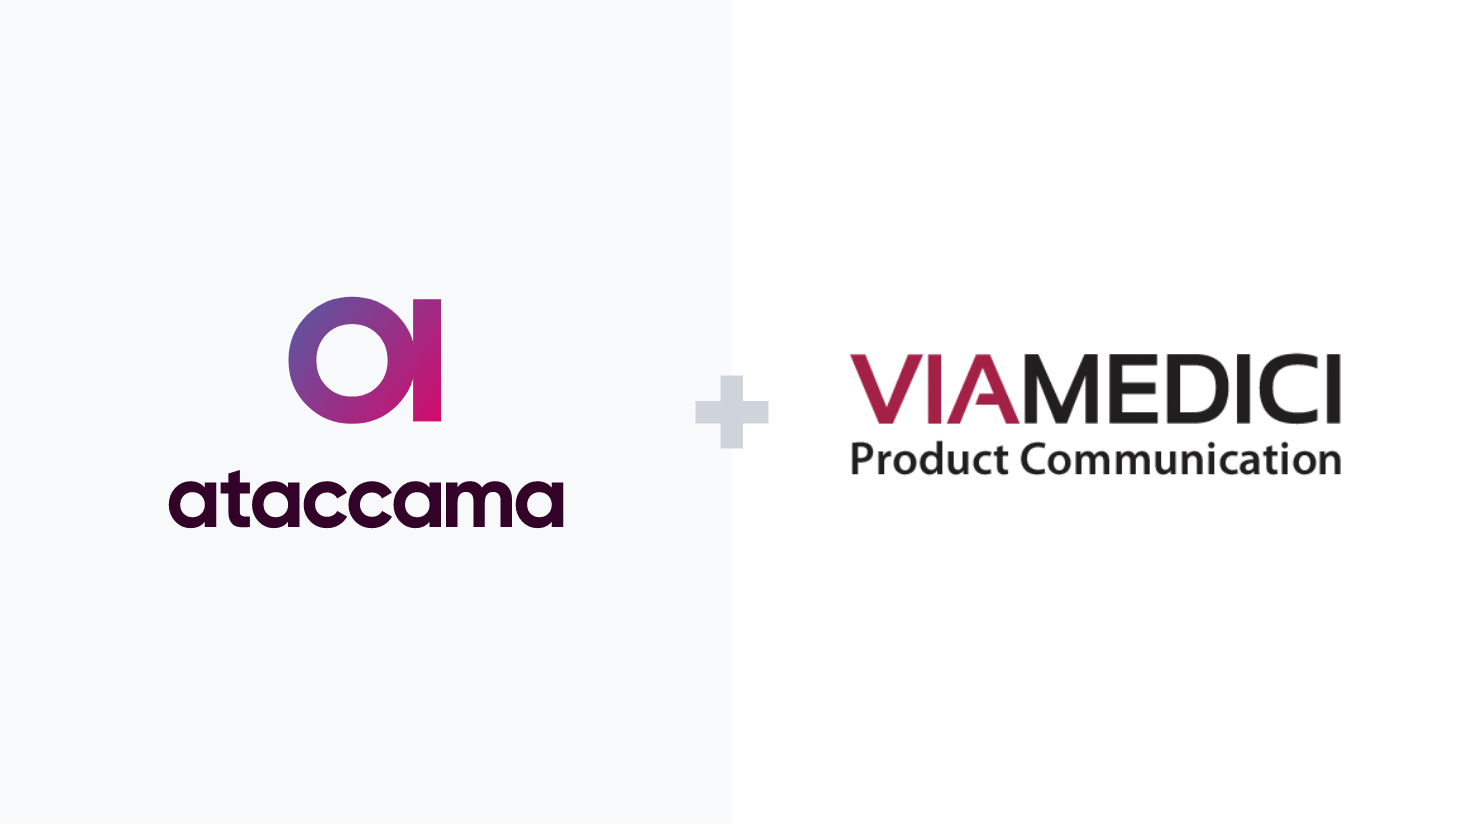 Viamedici and Ataccama Announce Technology Partnership